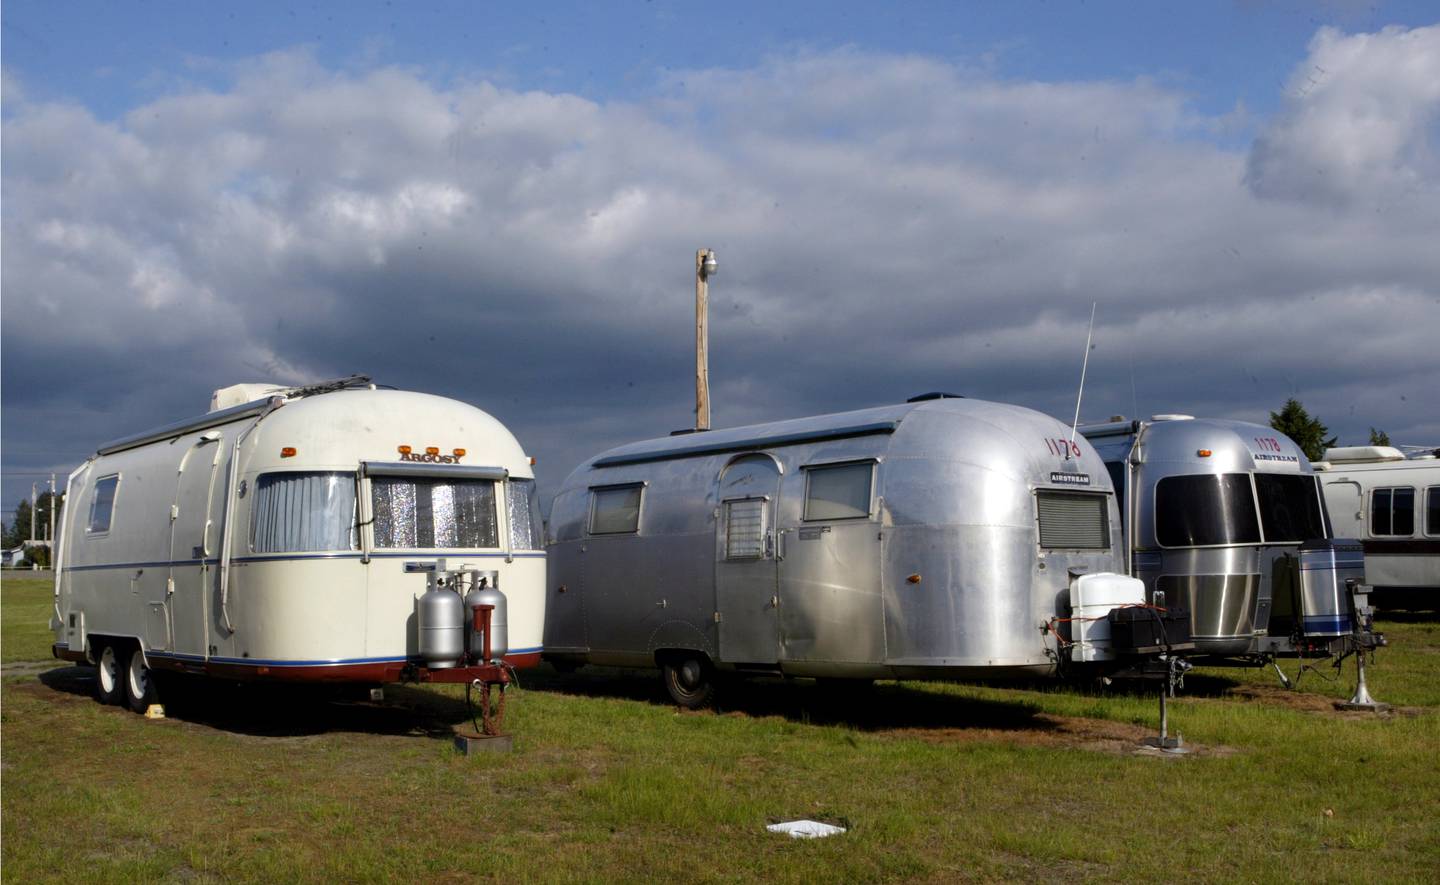 Airstream trailers